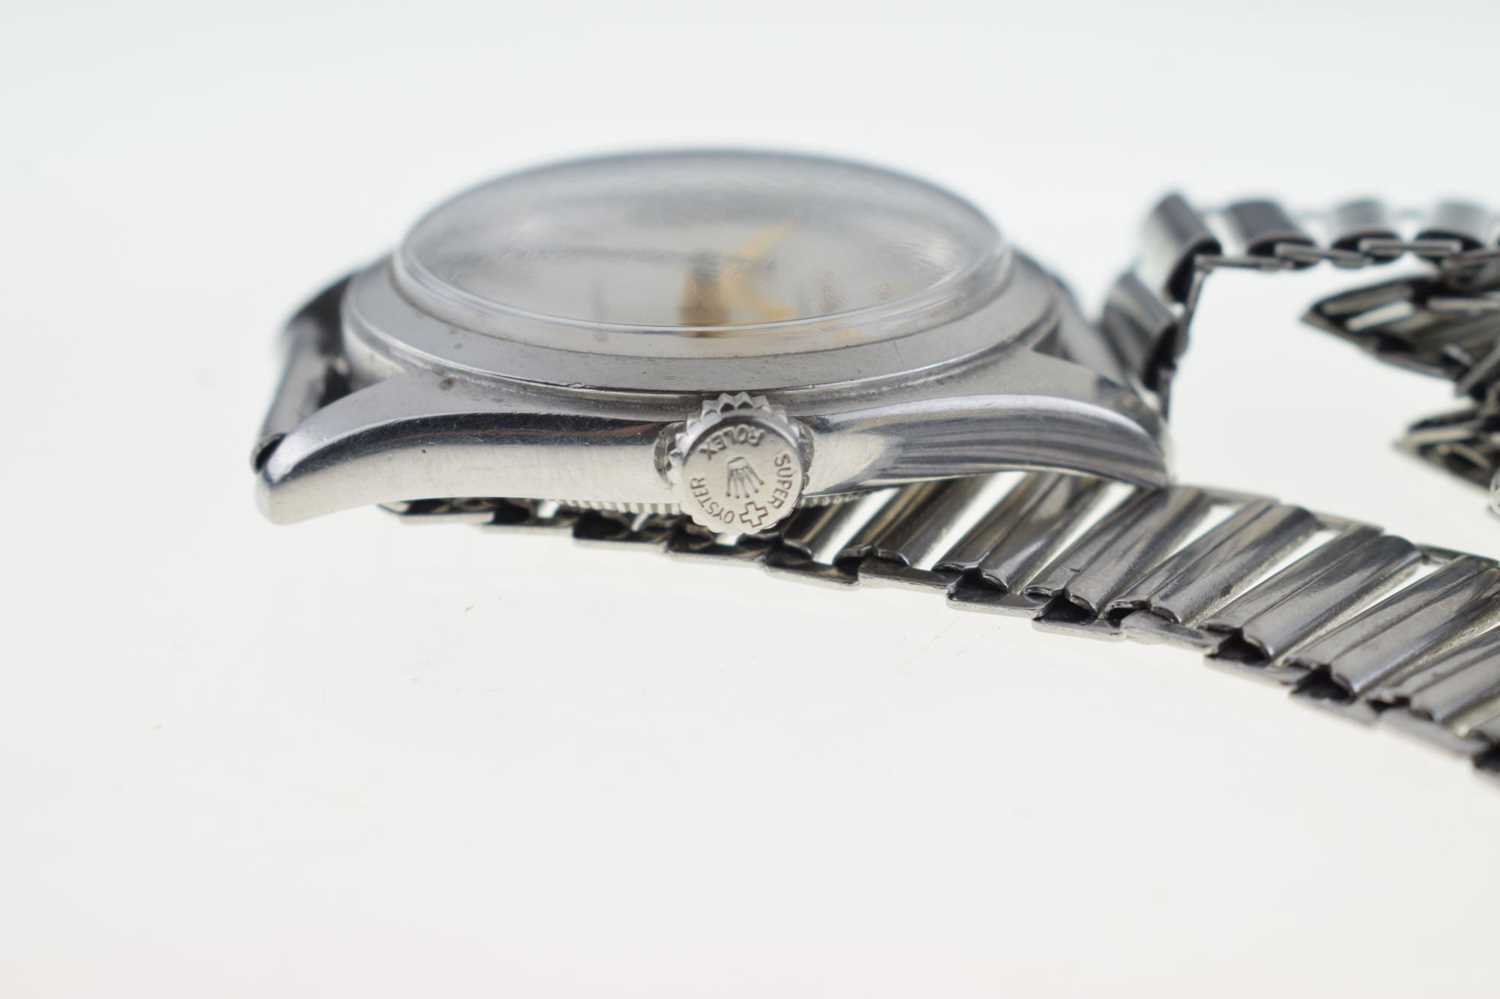 Rolex - Gentleman's Oyster stainless steel wristwatch - Image 9 of 11